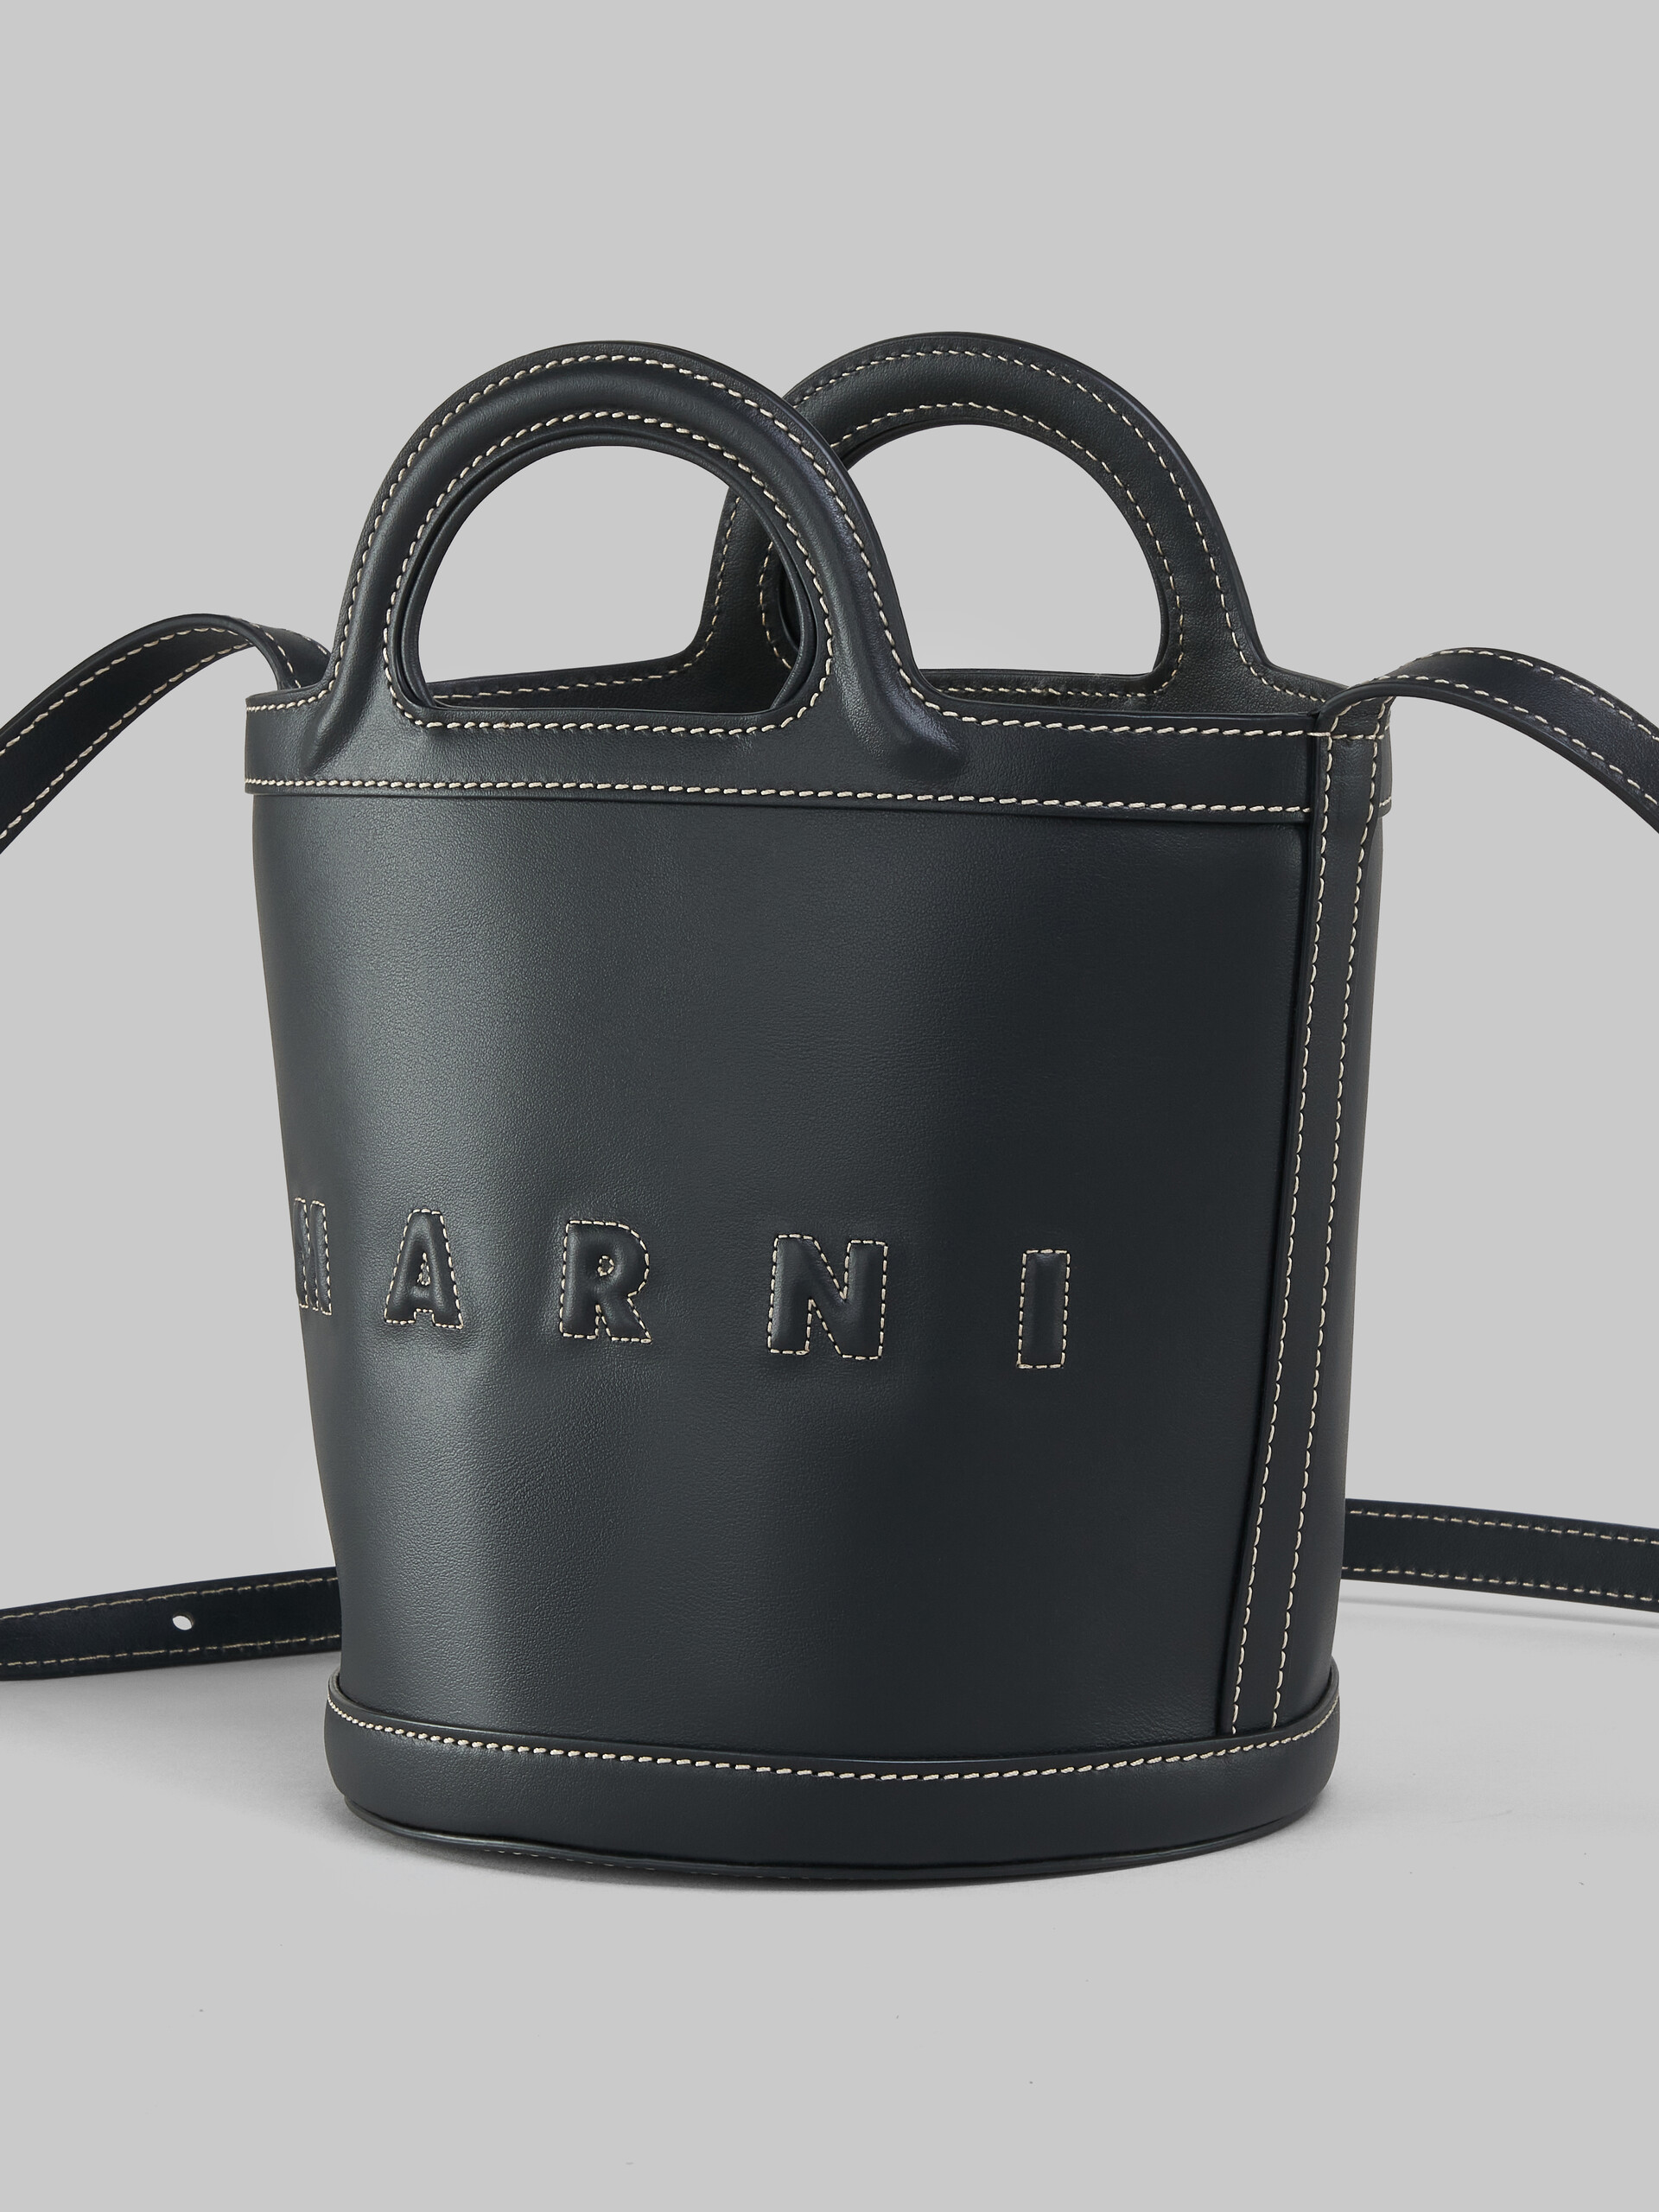 Marni Mini Bucket Bag with Drawstring in Dark Grey Curated at Jake and Jones